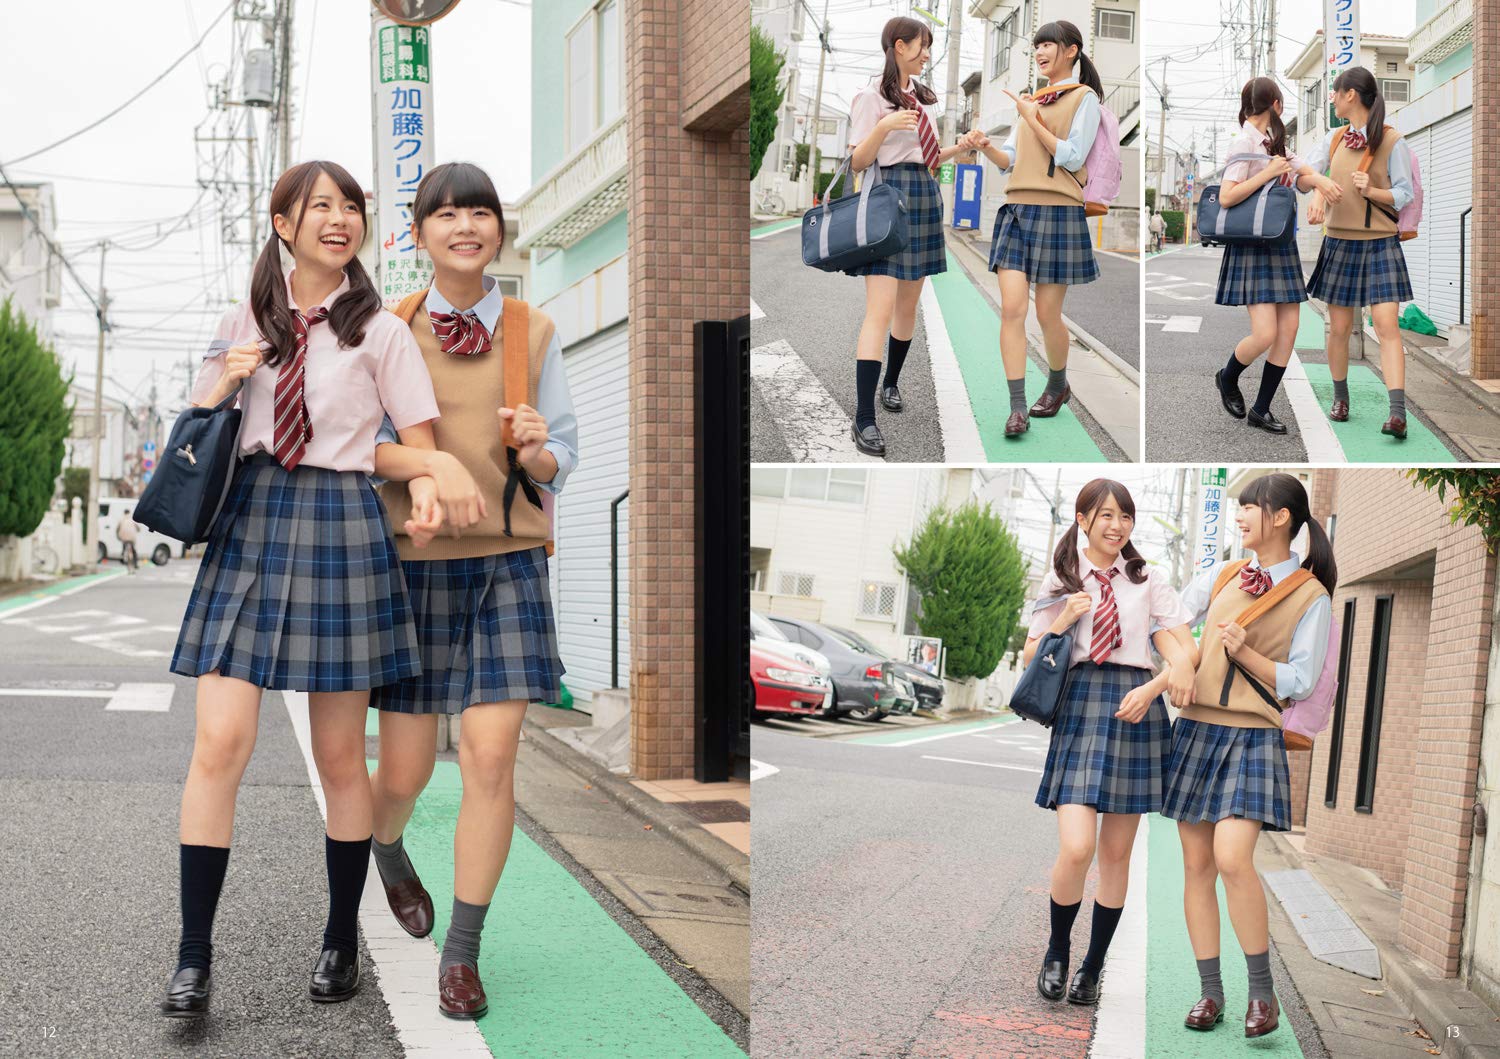 Daratto shita pose catalog Vol.3 - :: After school good friend high school girl